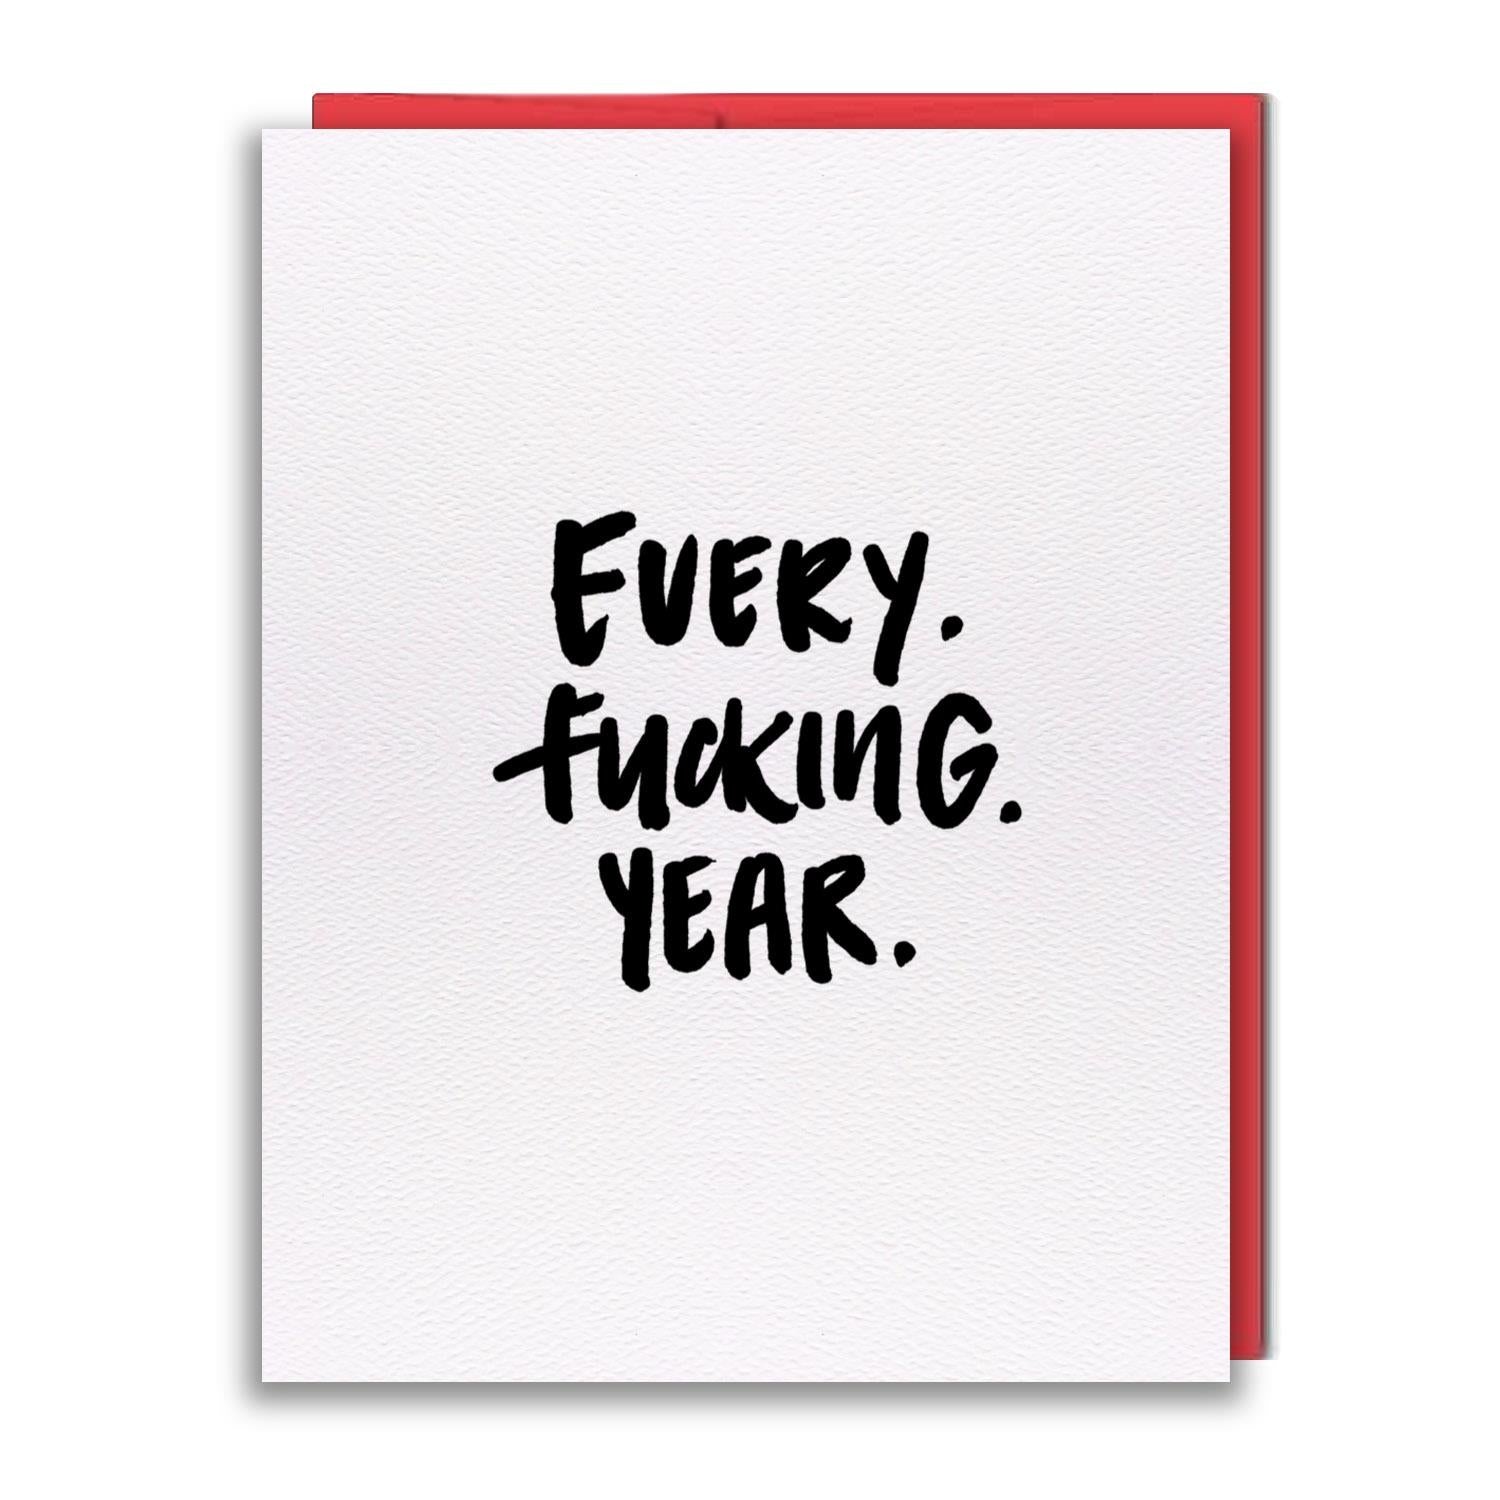 Every Fucking Year Year Greeting Card